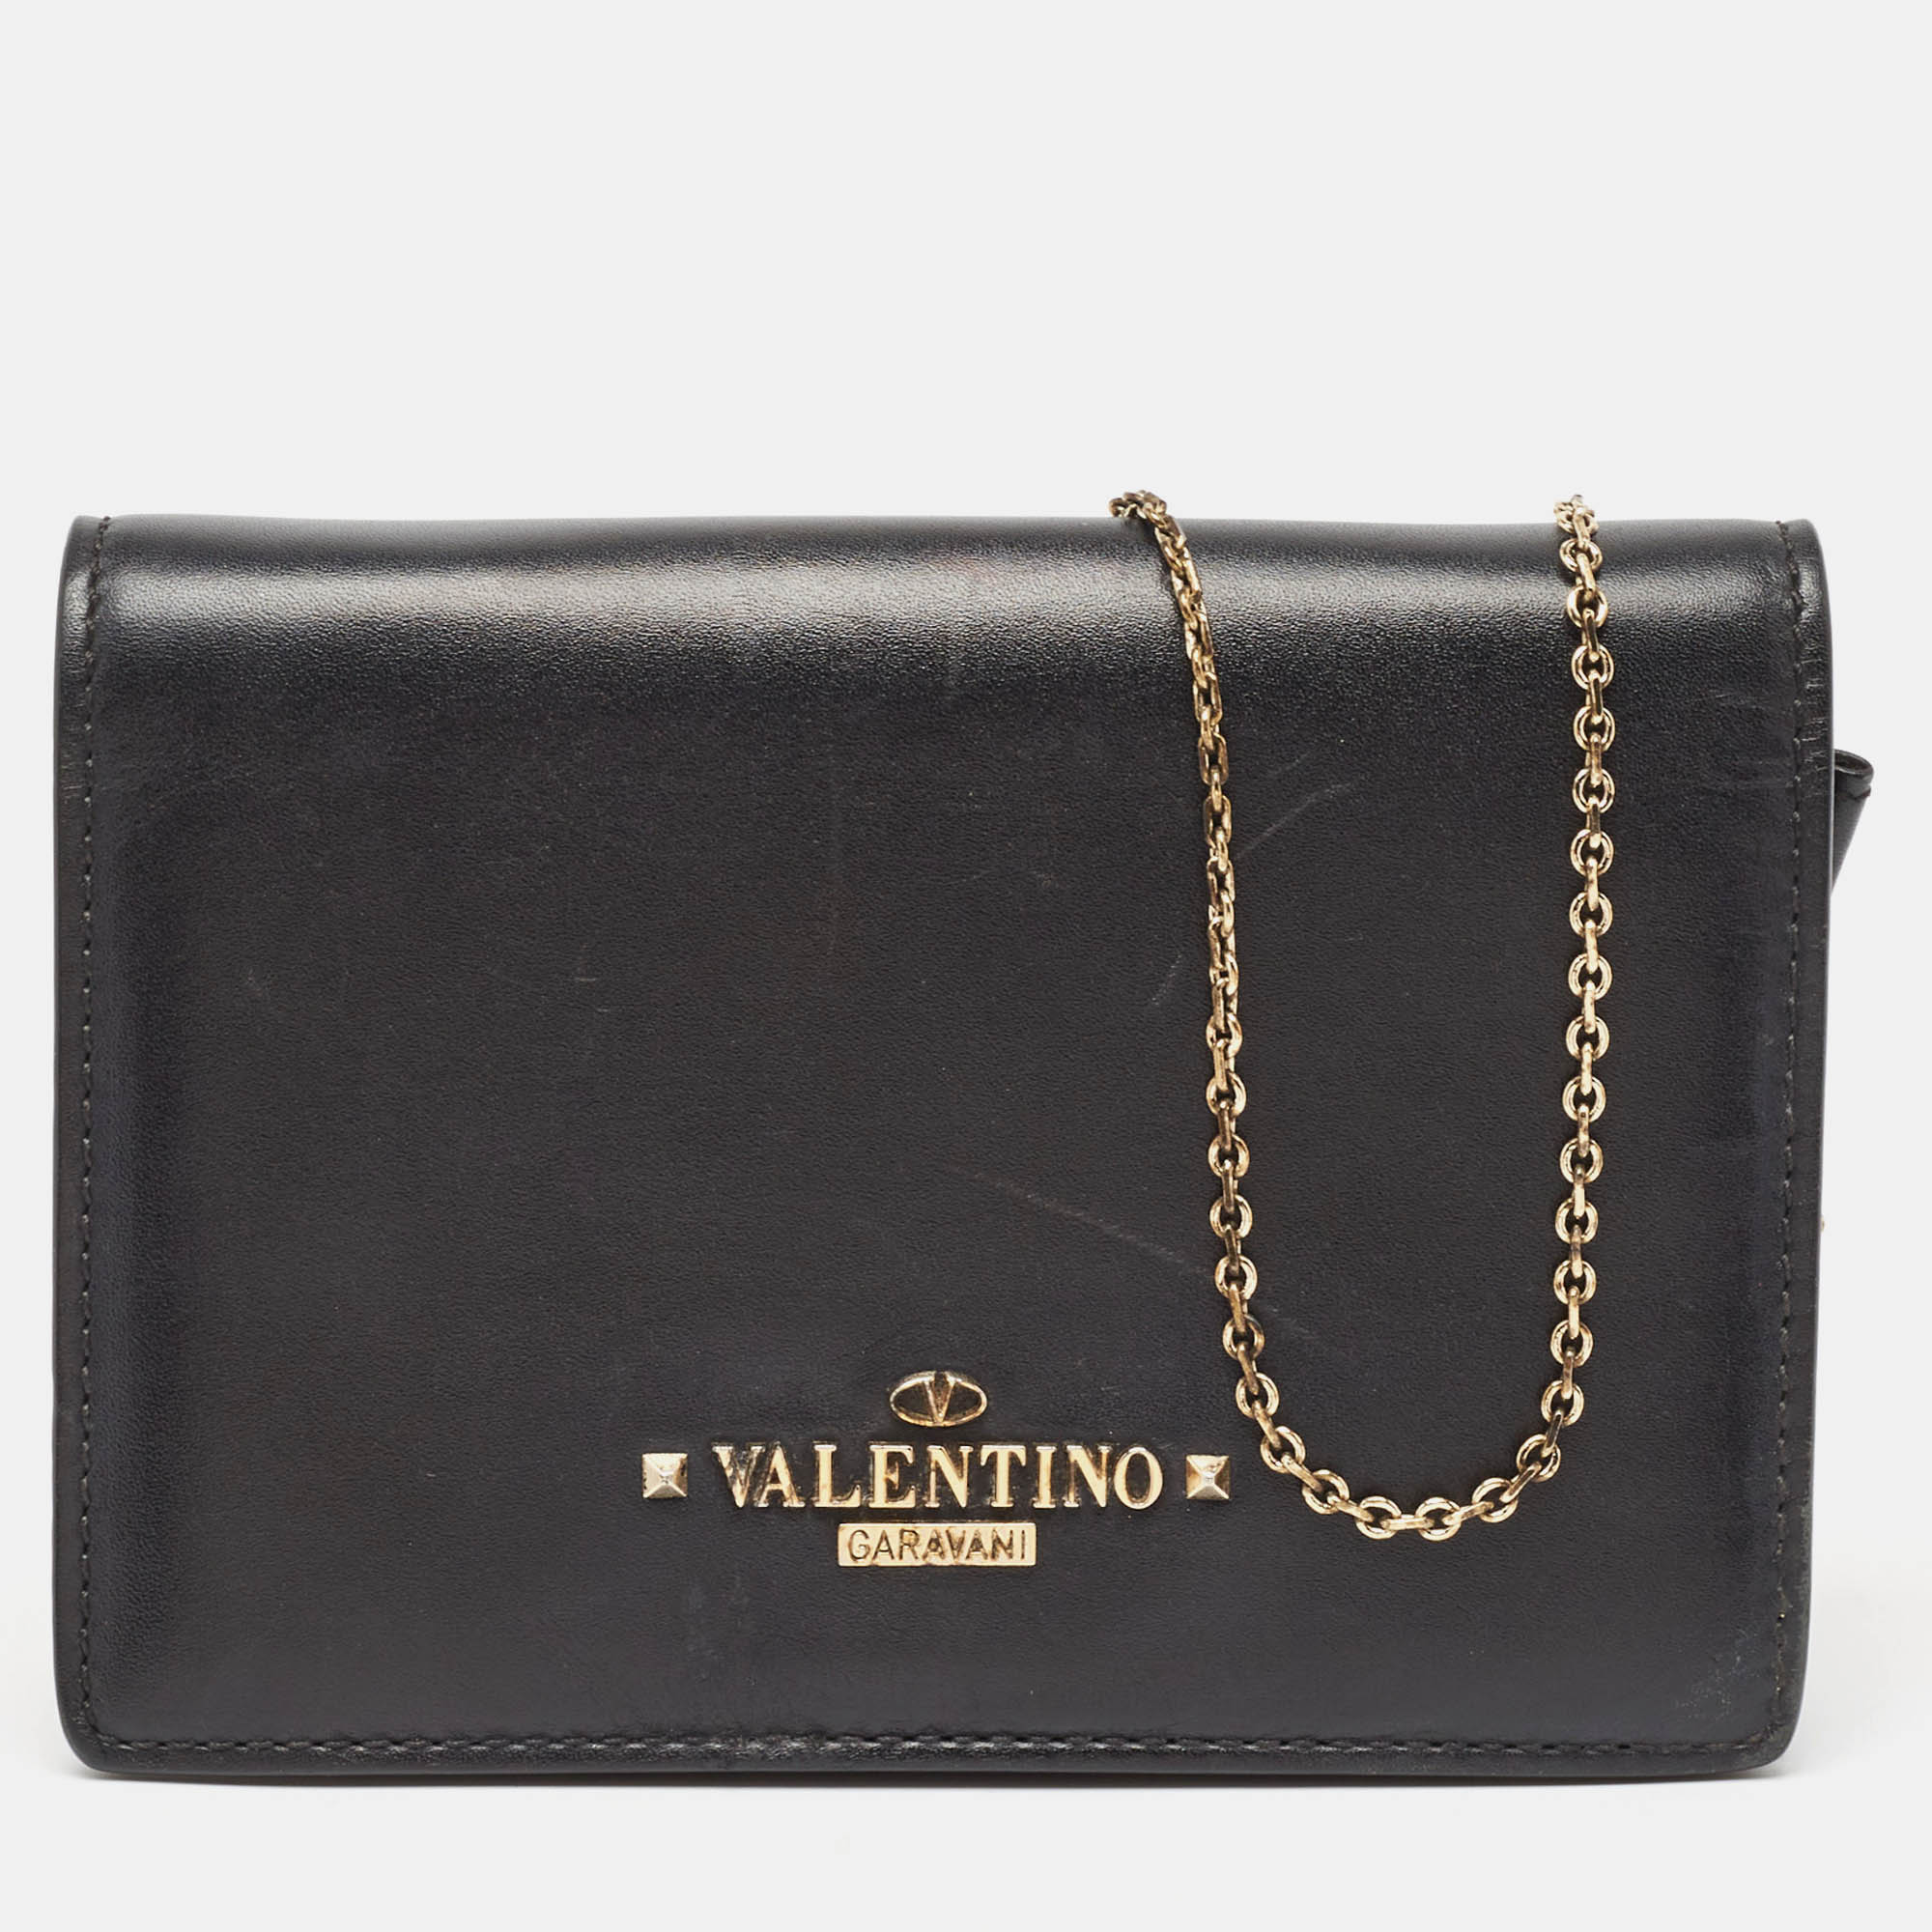 Pre-owned Valentino Garavani Black Leather Flap Chain Clutch